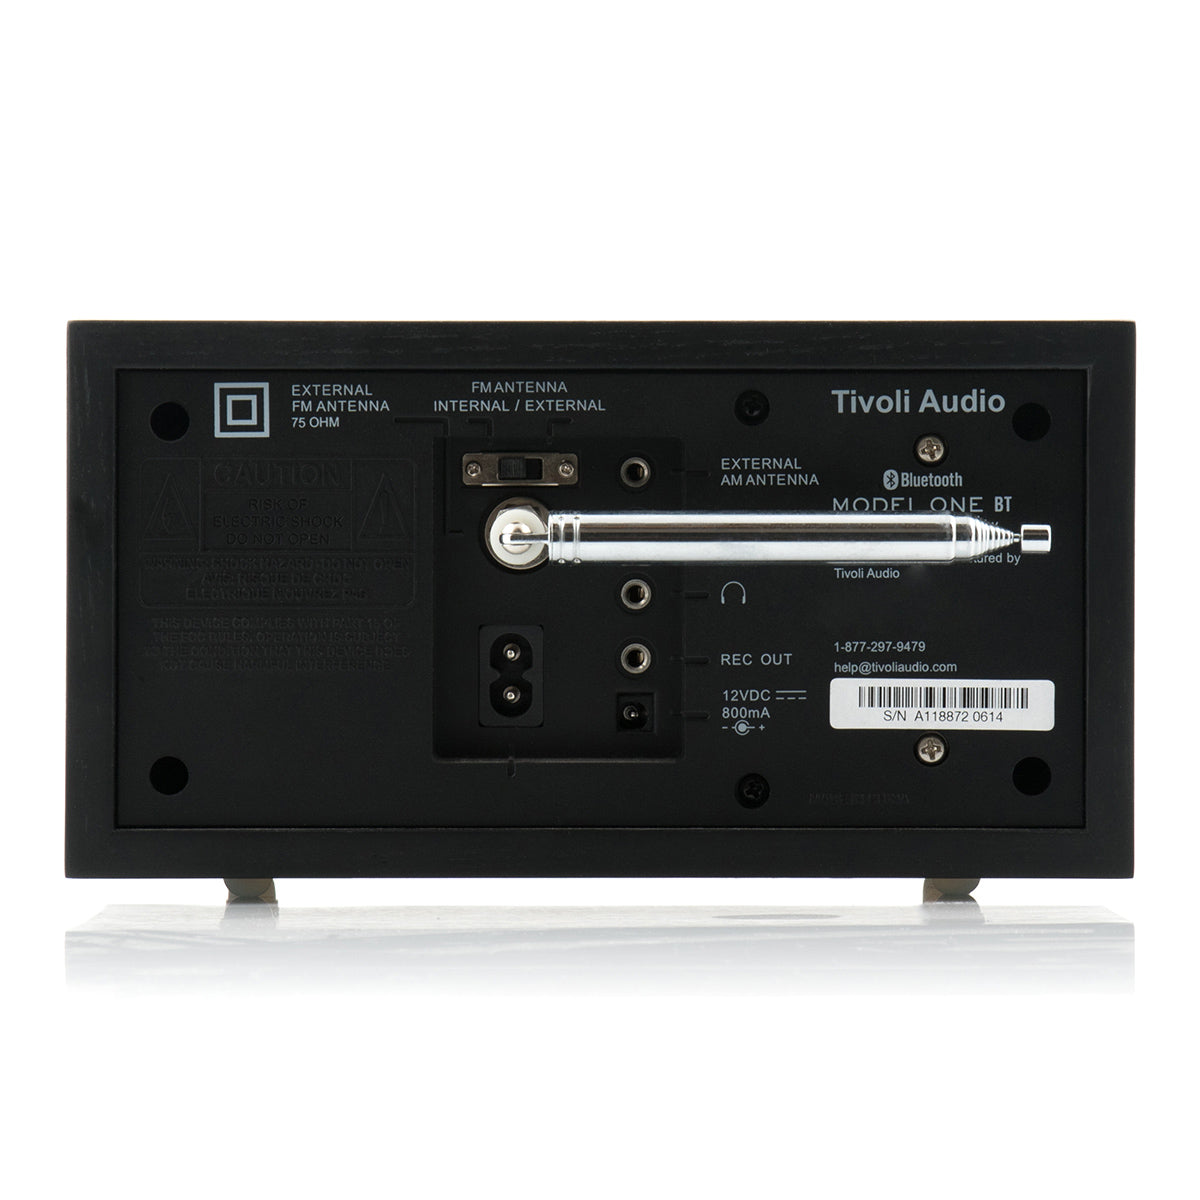 Tivoli Audio Model One Bluetooth AM/FM Radio & Speaker (Black